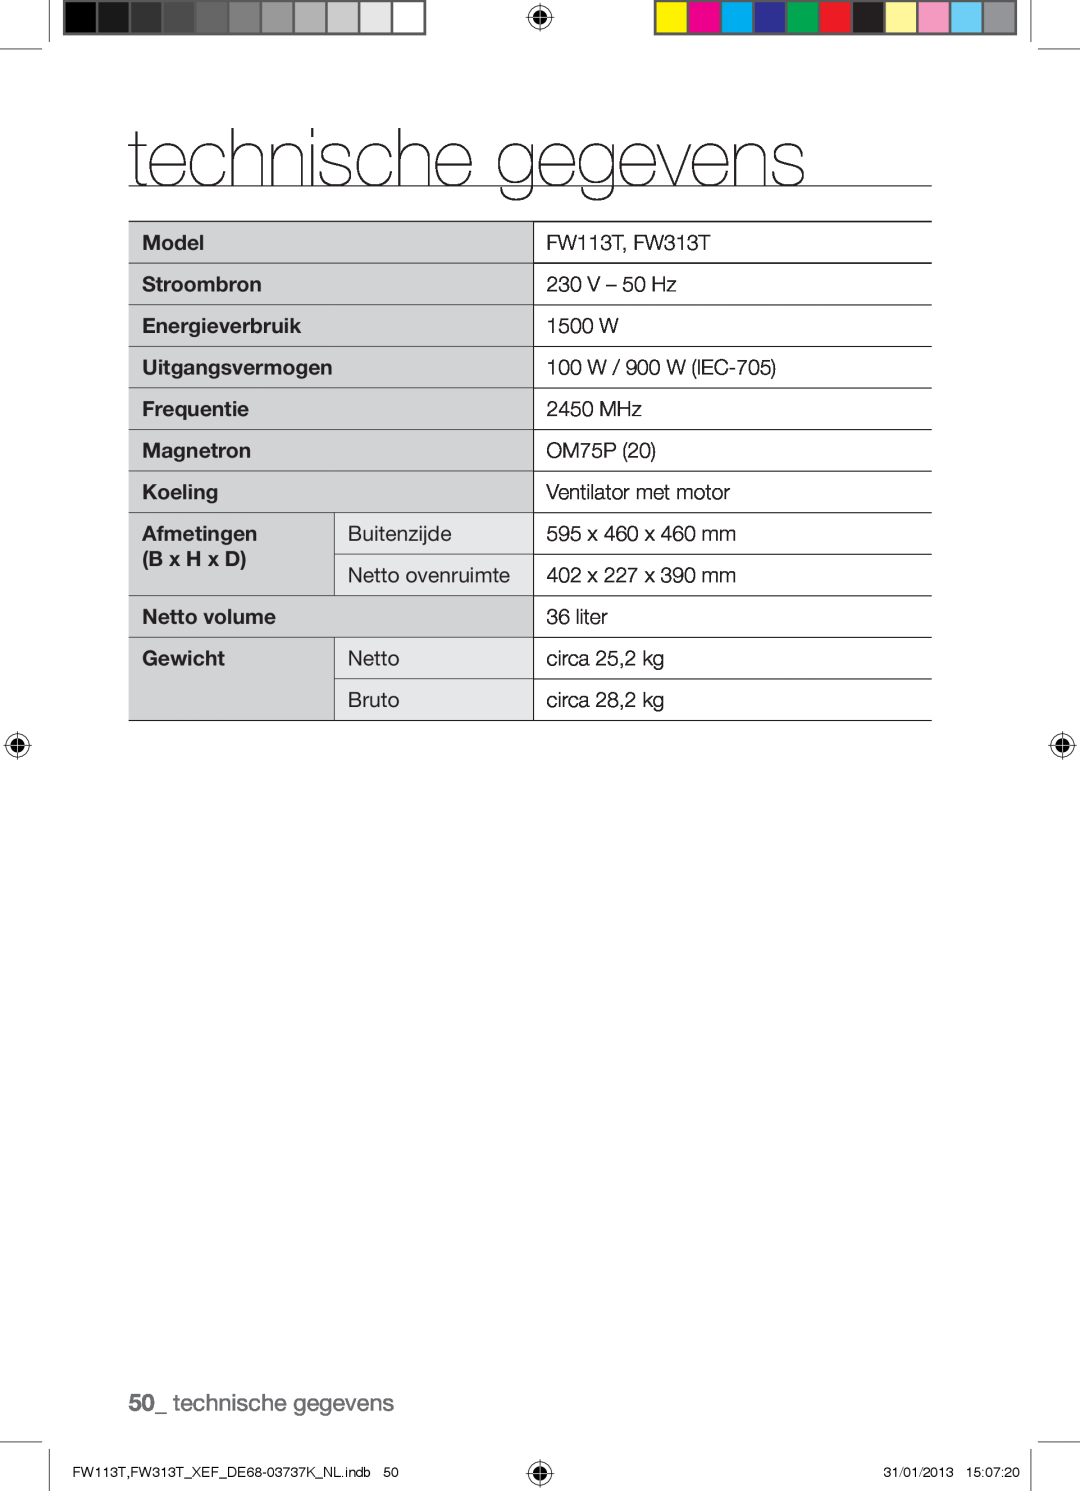 Samsung FW113T002/XEF manual technische gegevens 